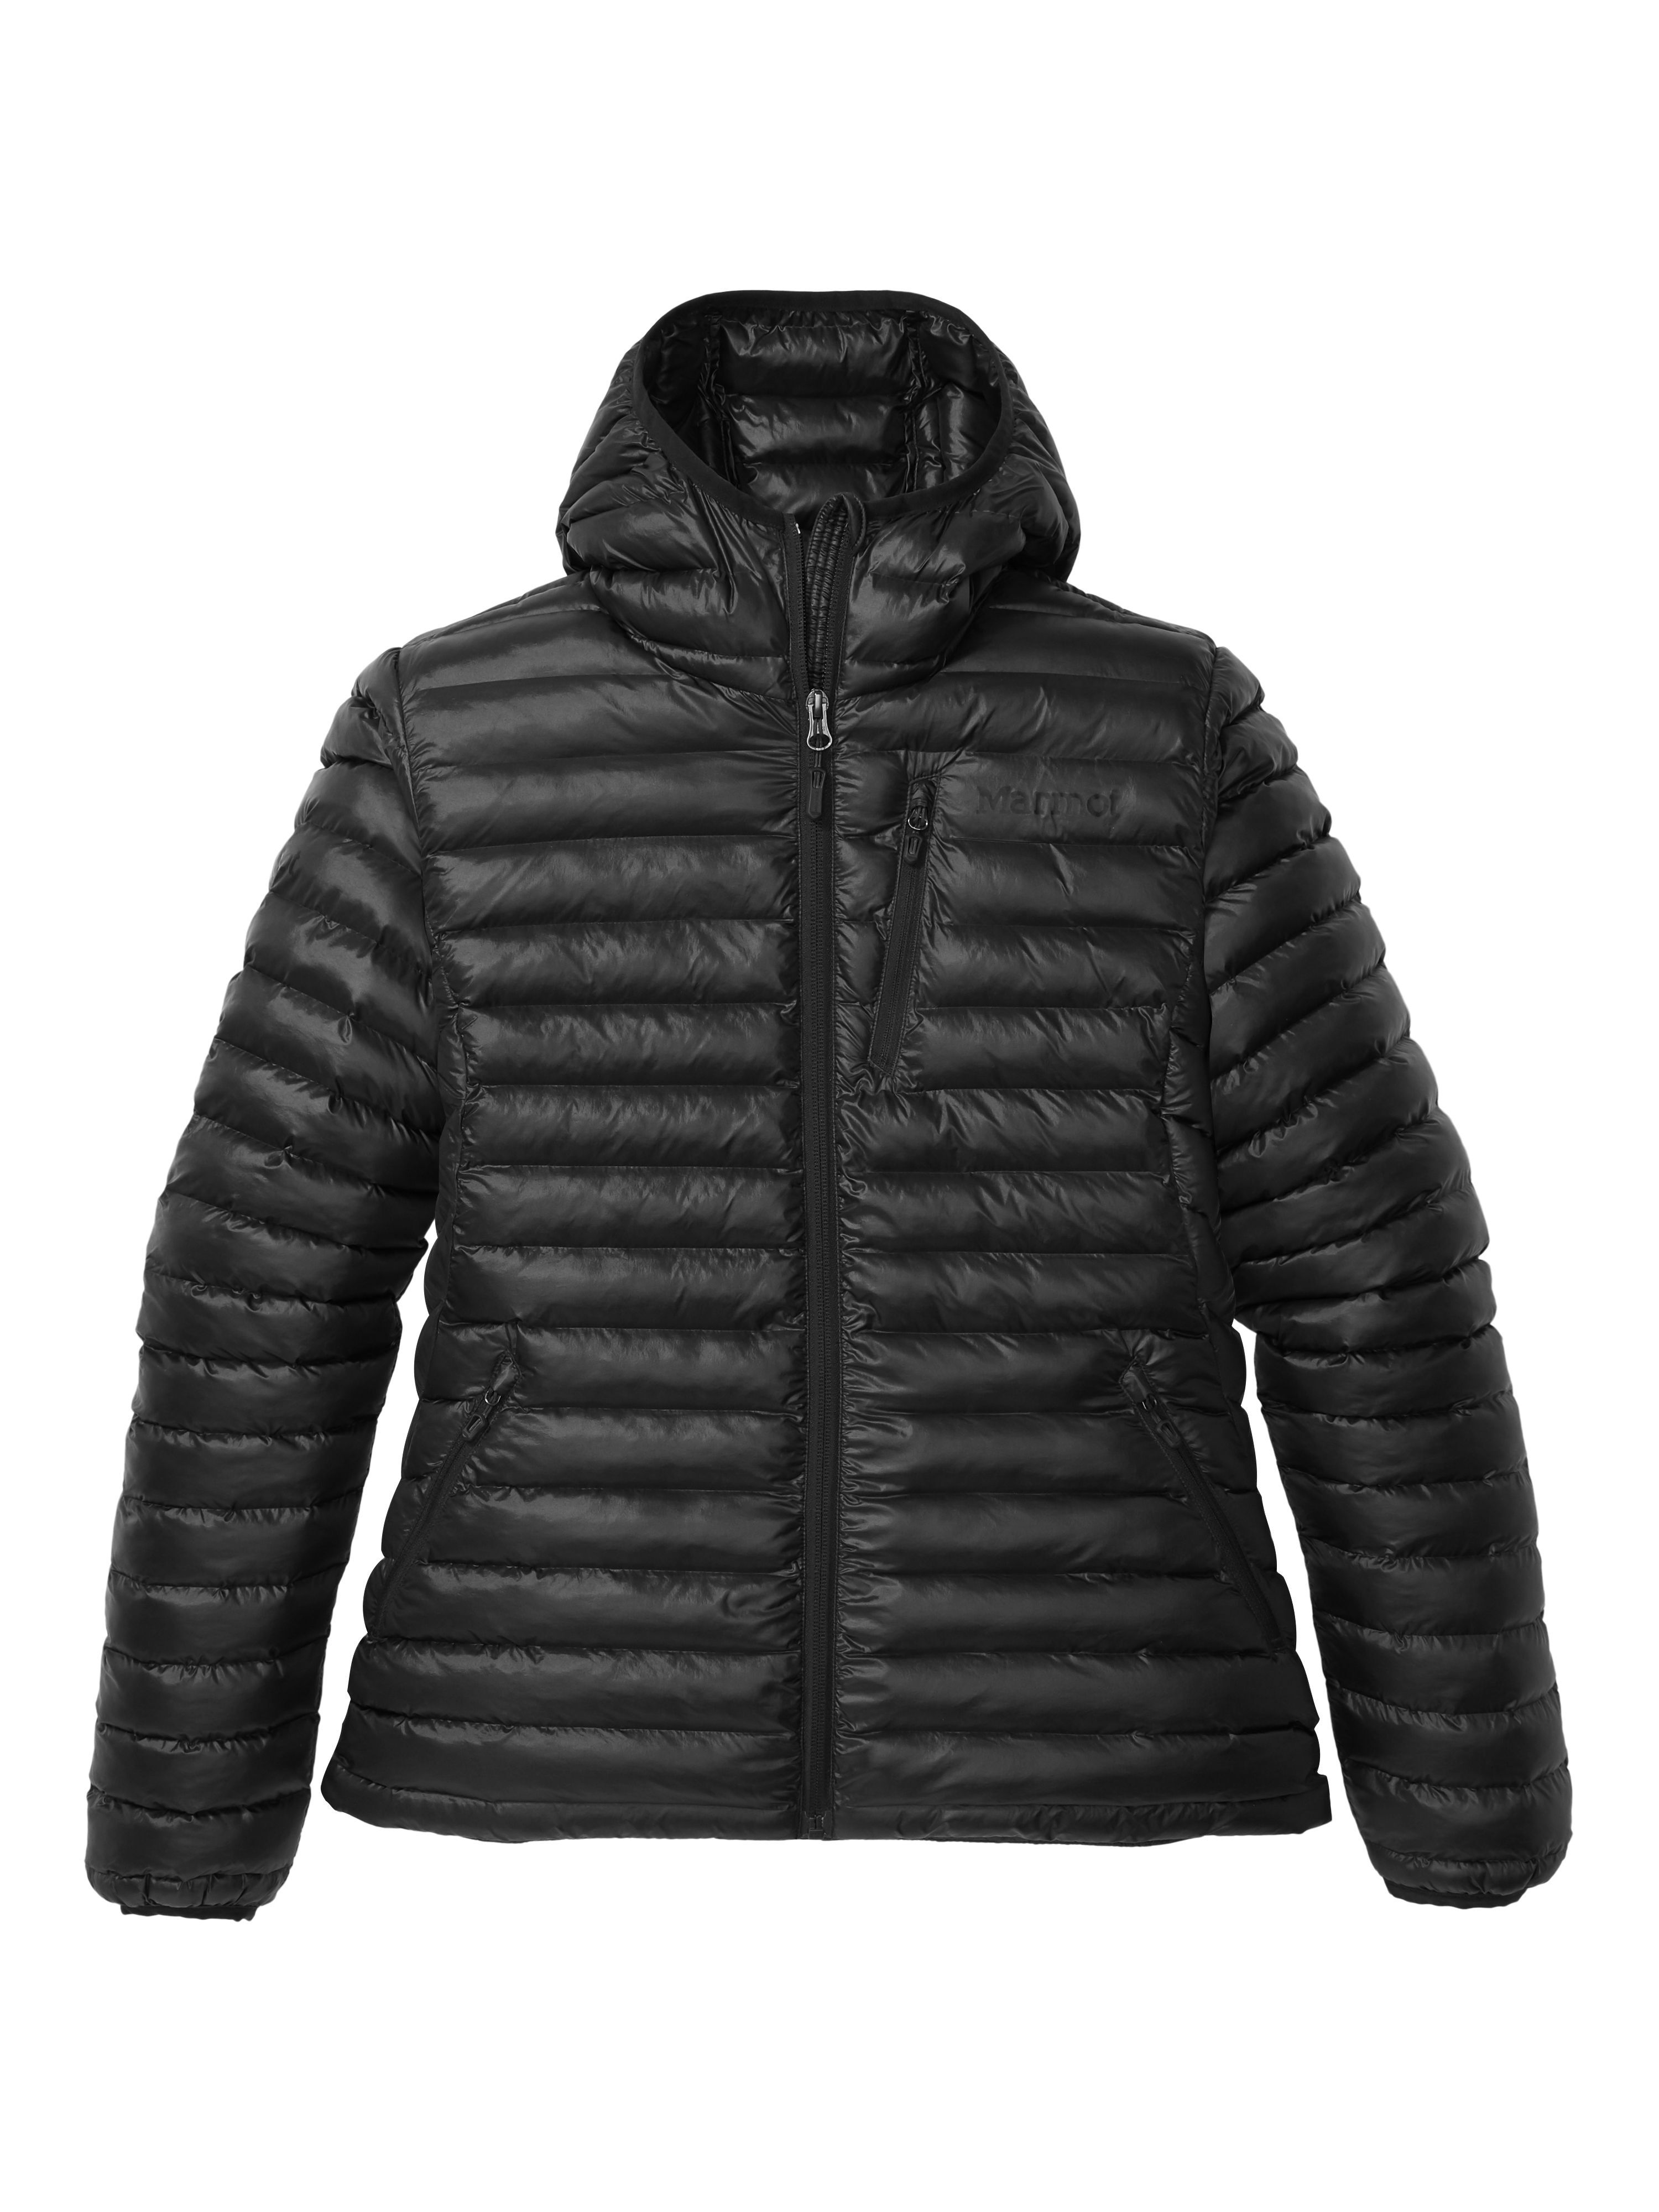 Marmot Avant Featherless Hoody - Synthetic jacket - Women's